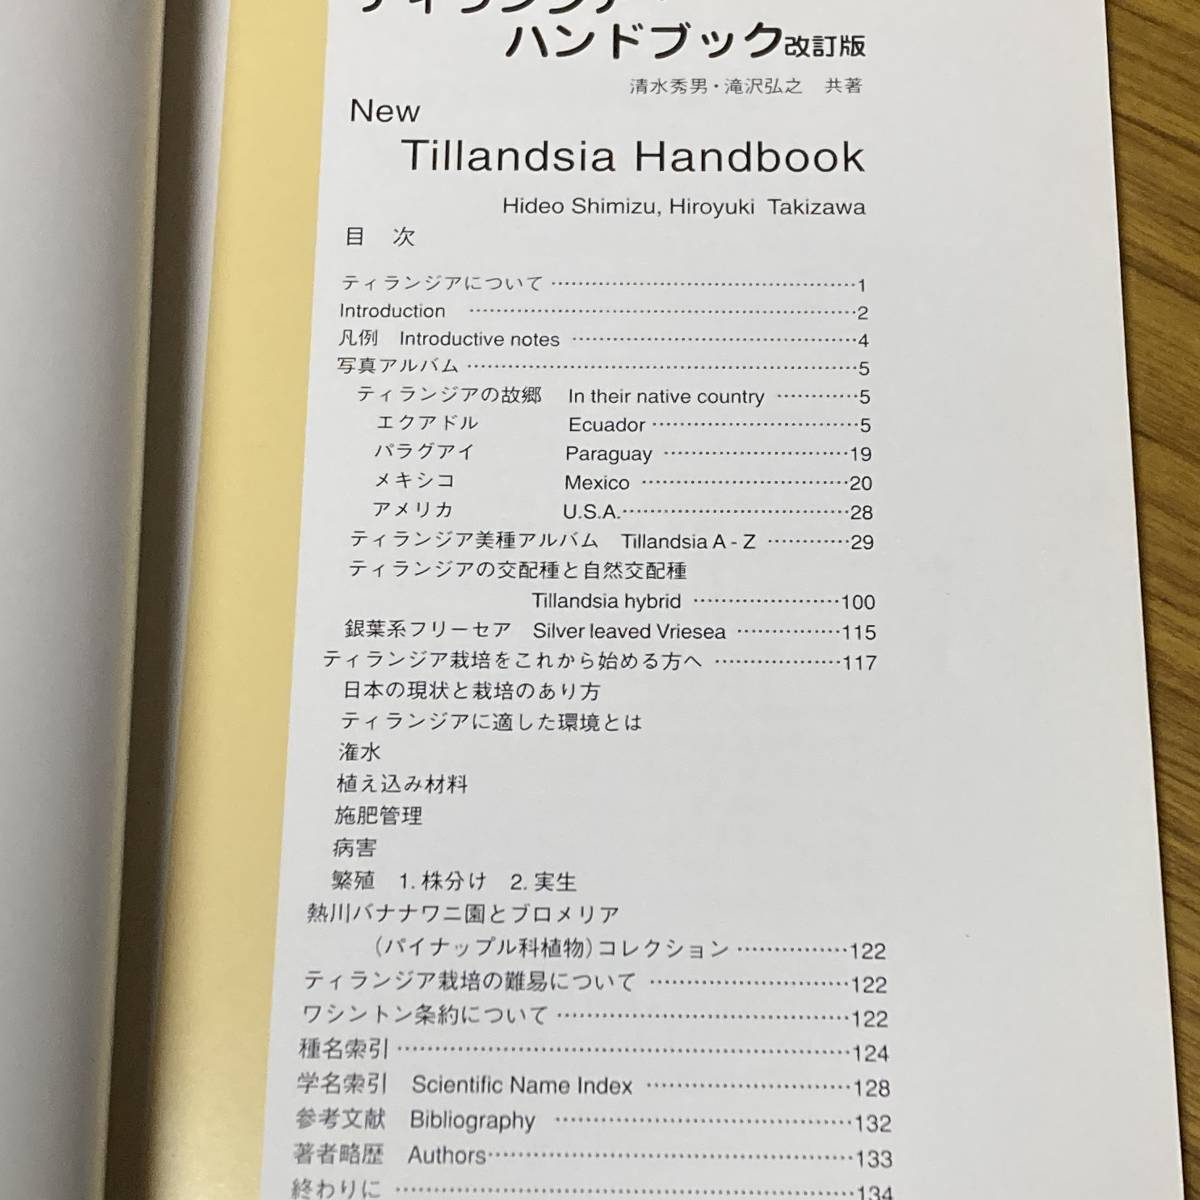 ti Ran jia hand book ( modified . version ) Shimizu preeminence man | work ....| work 1998 year Tillandsia[A11]